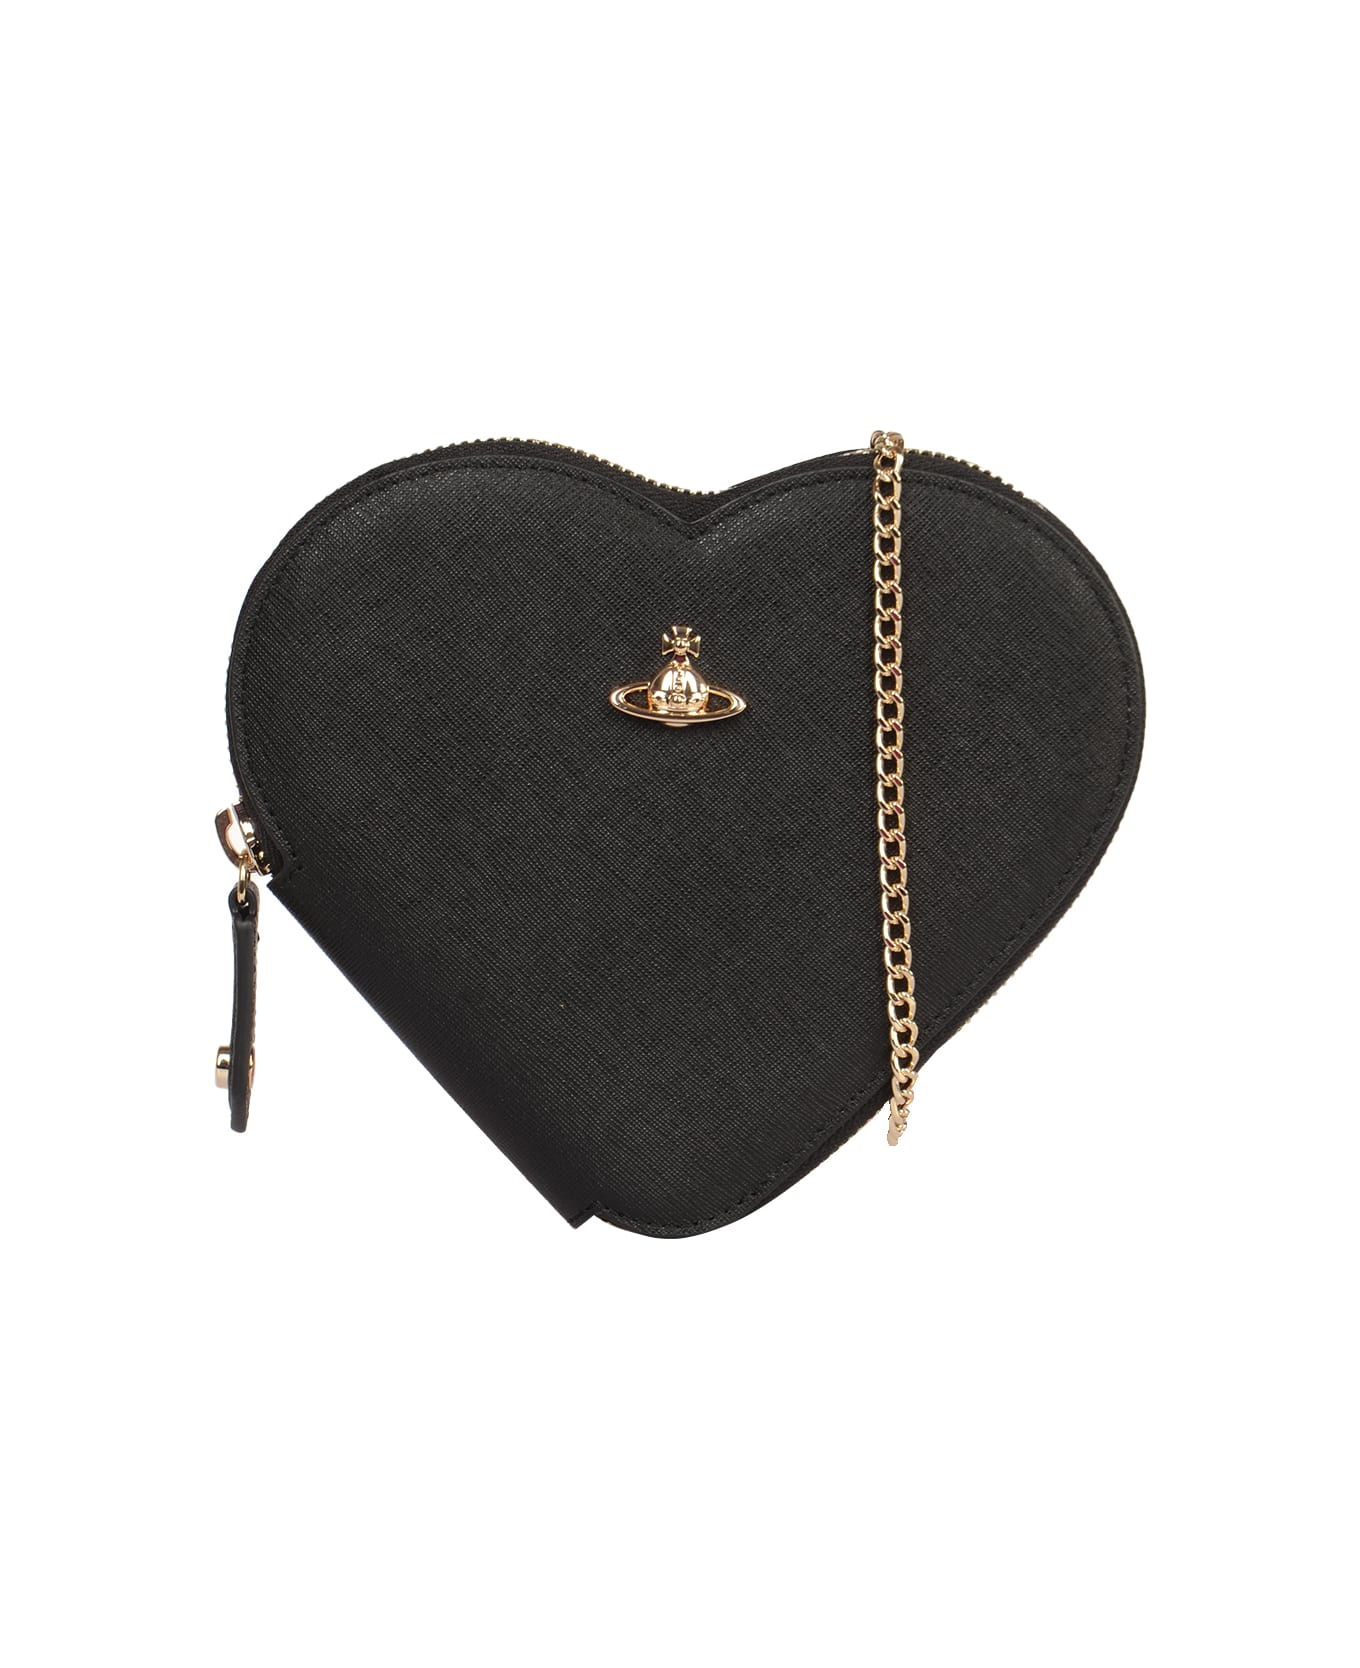 Vivienne Westwood New Heart Crossbody Bag - Black